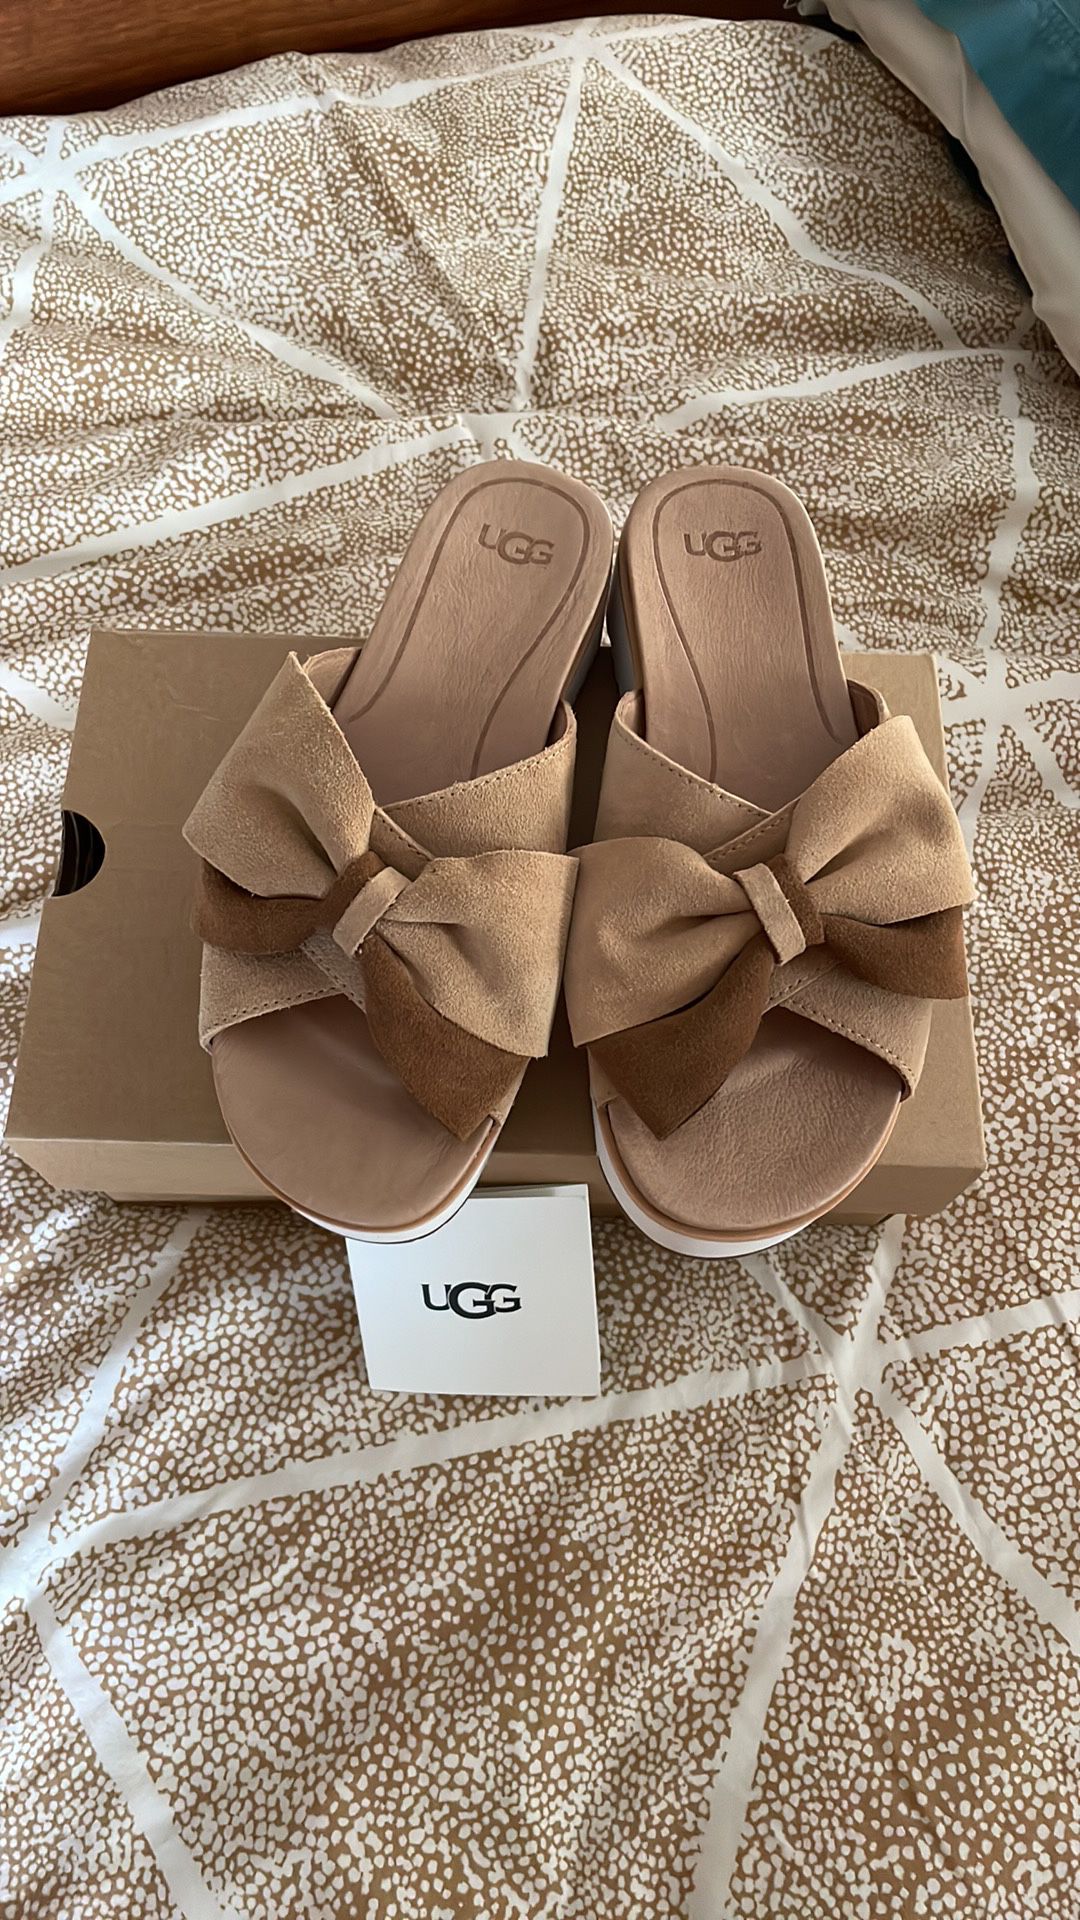 UGG Joanie Platform Sandals Chestnut Size 7.5